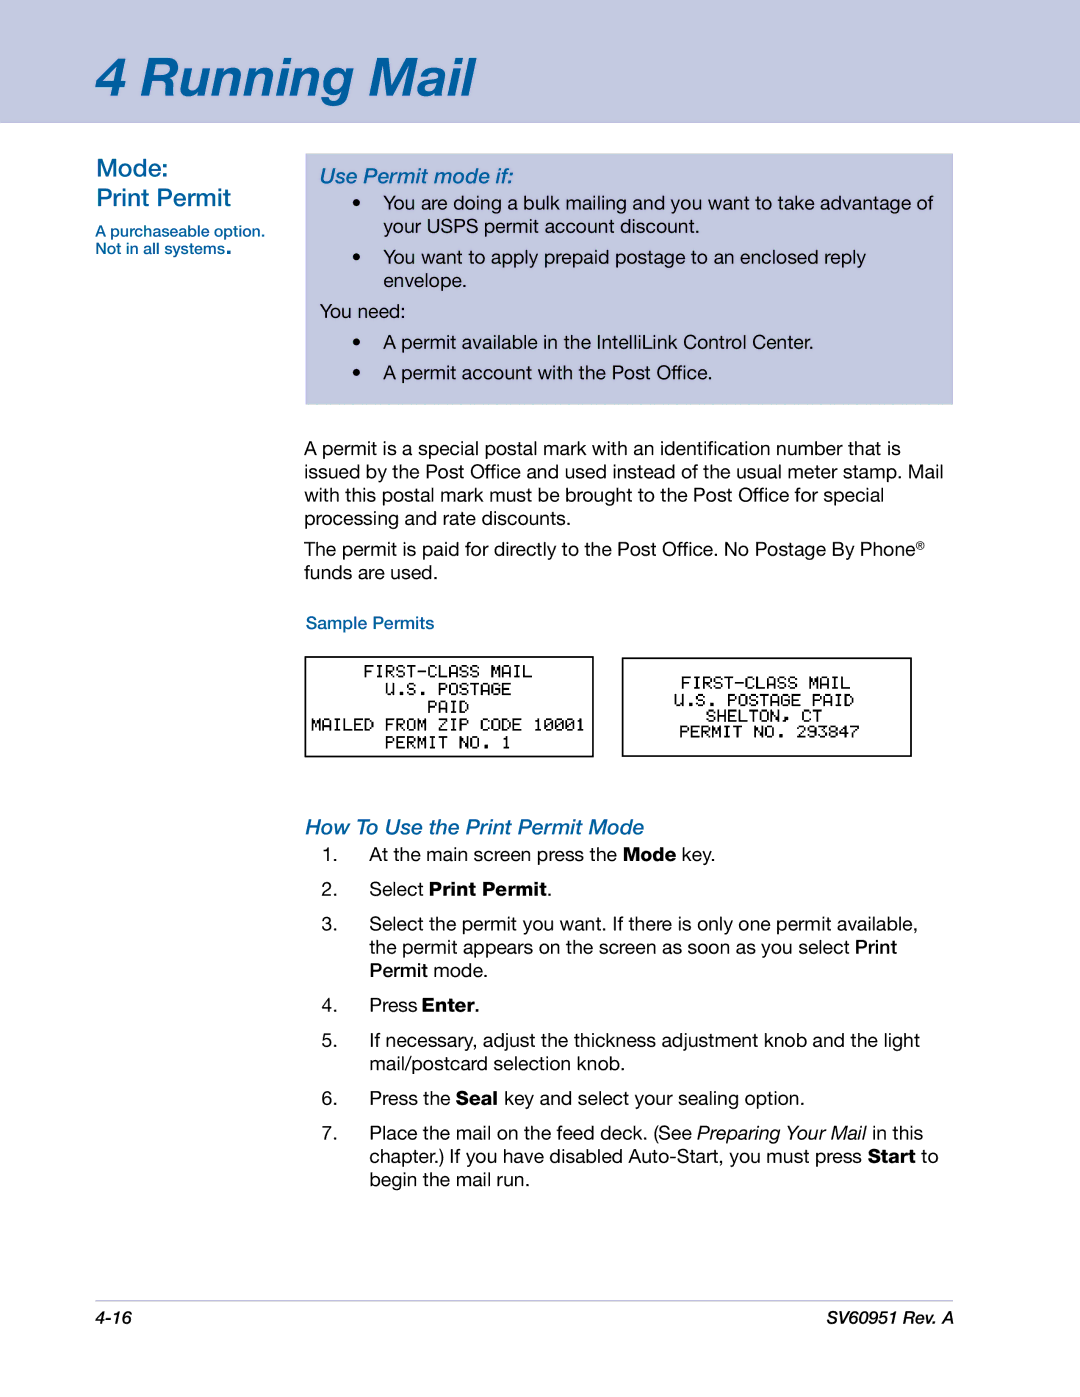 Pitney Bowes DM1000 manual Mode Print Permit, Use Permit mode if, How To Use the Print Permit Mode, Select Print Permit 